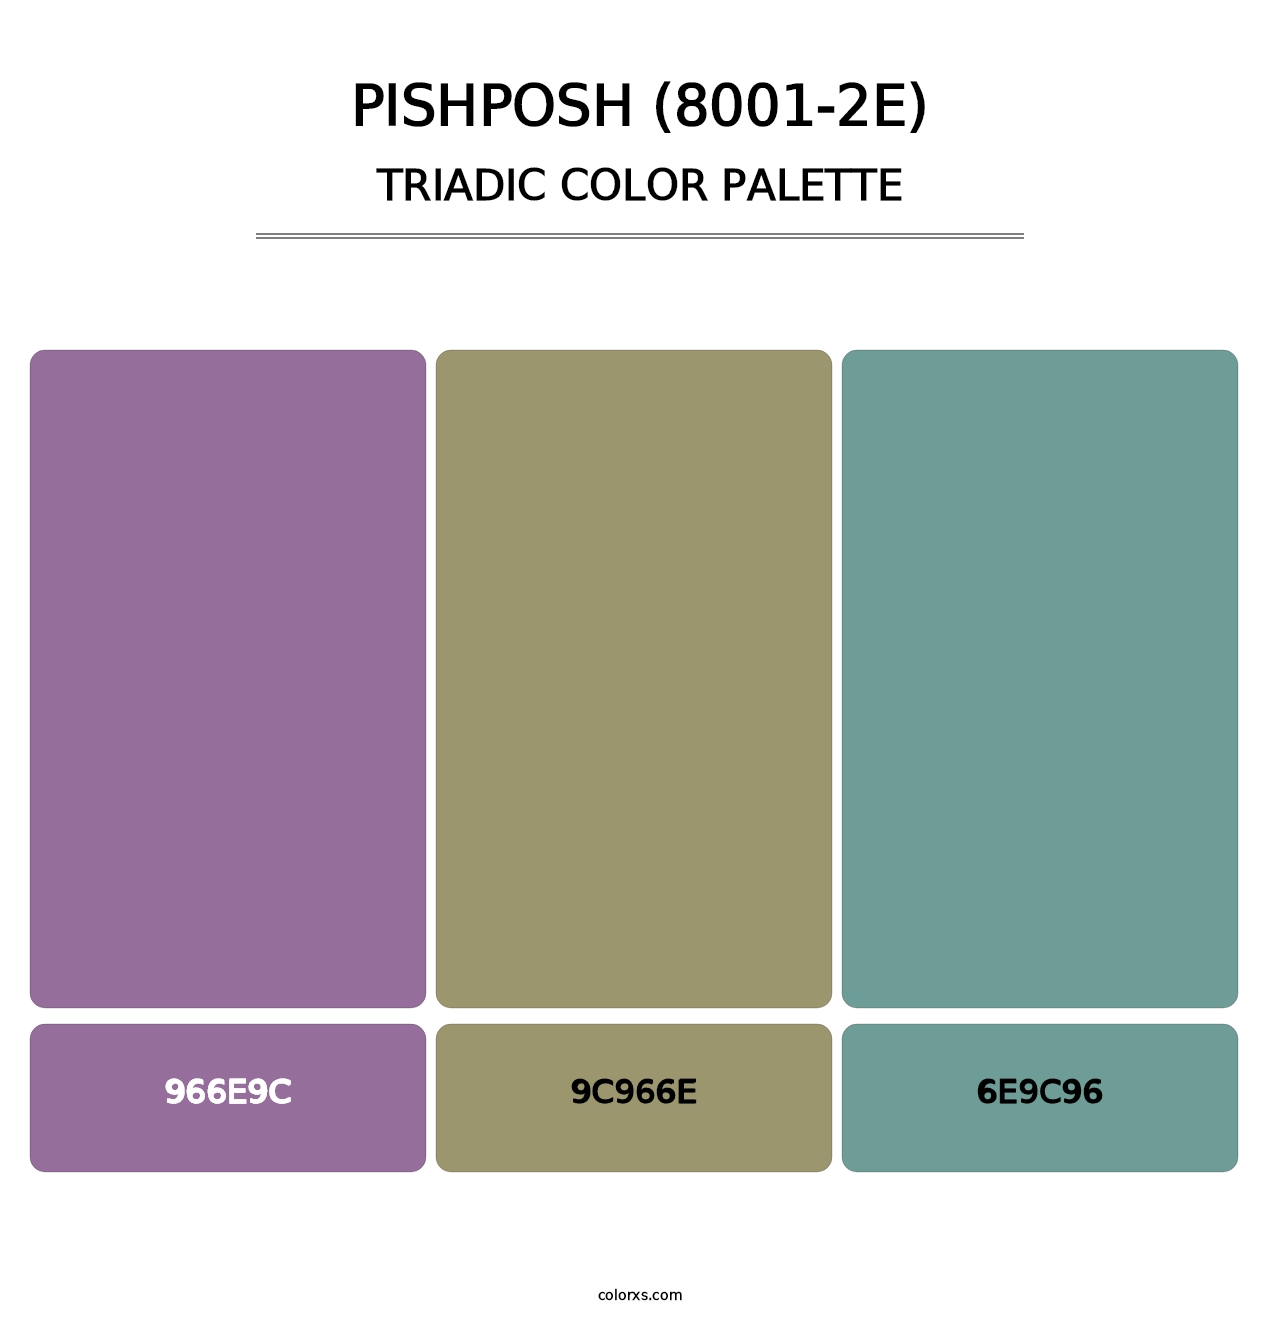 Pishposh (8001-2E) - Triadic Color Palette